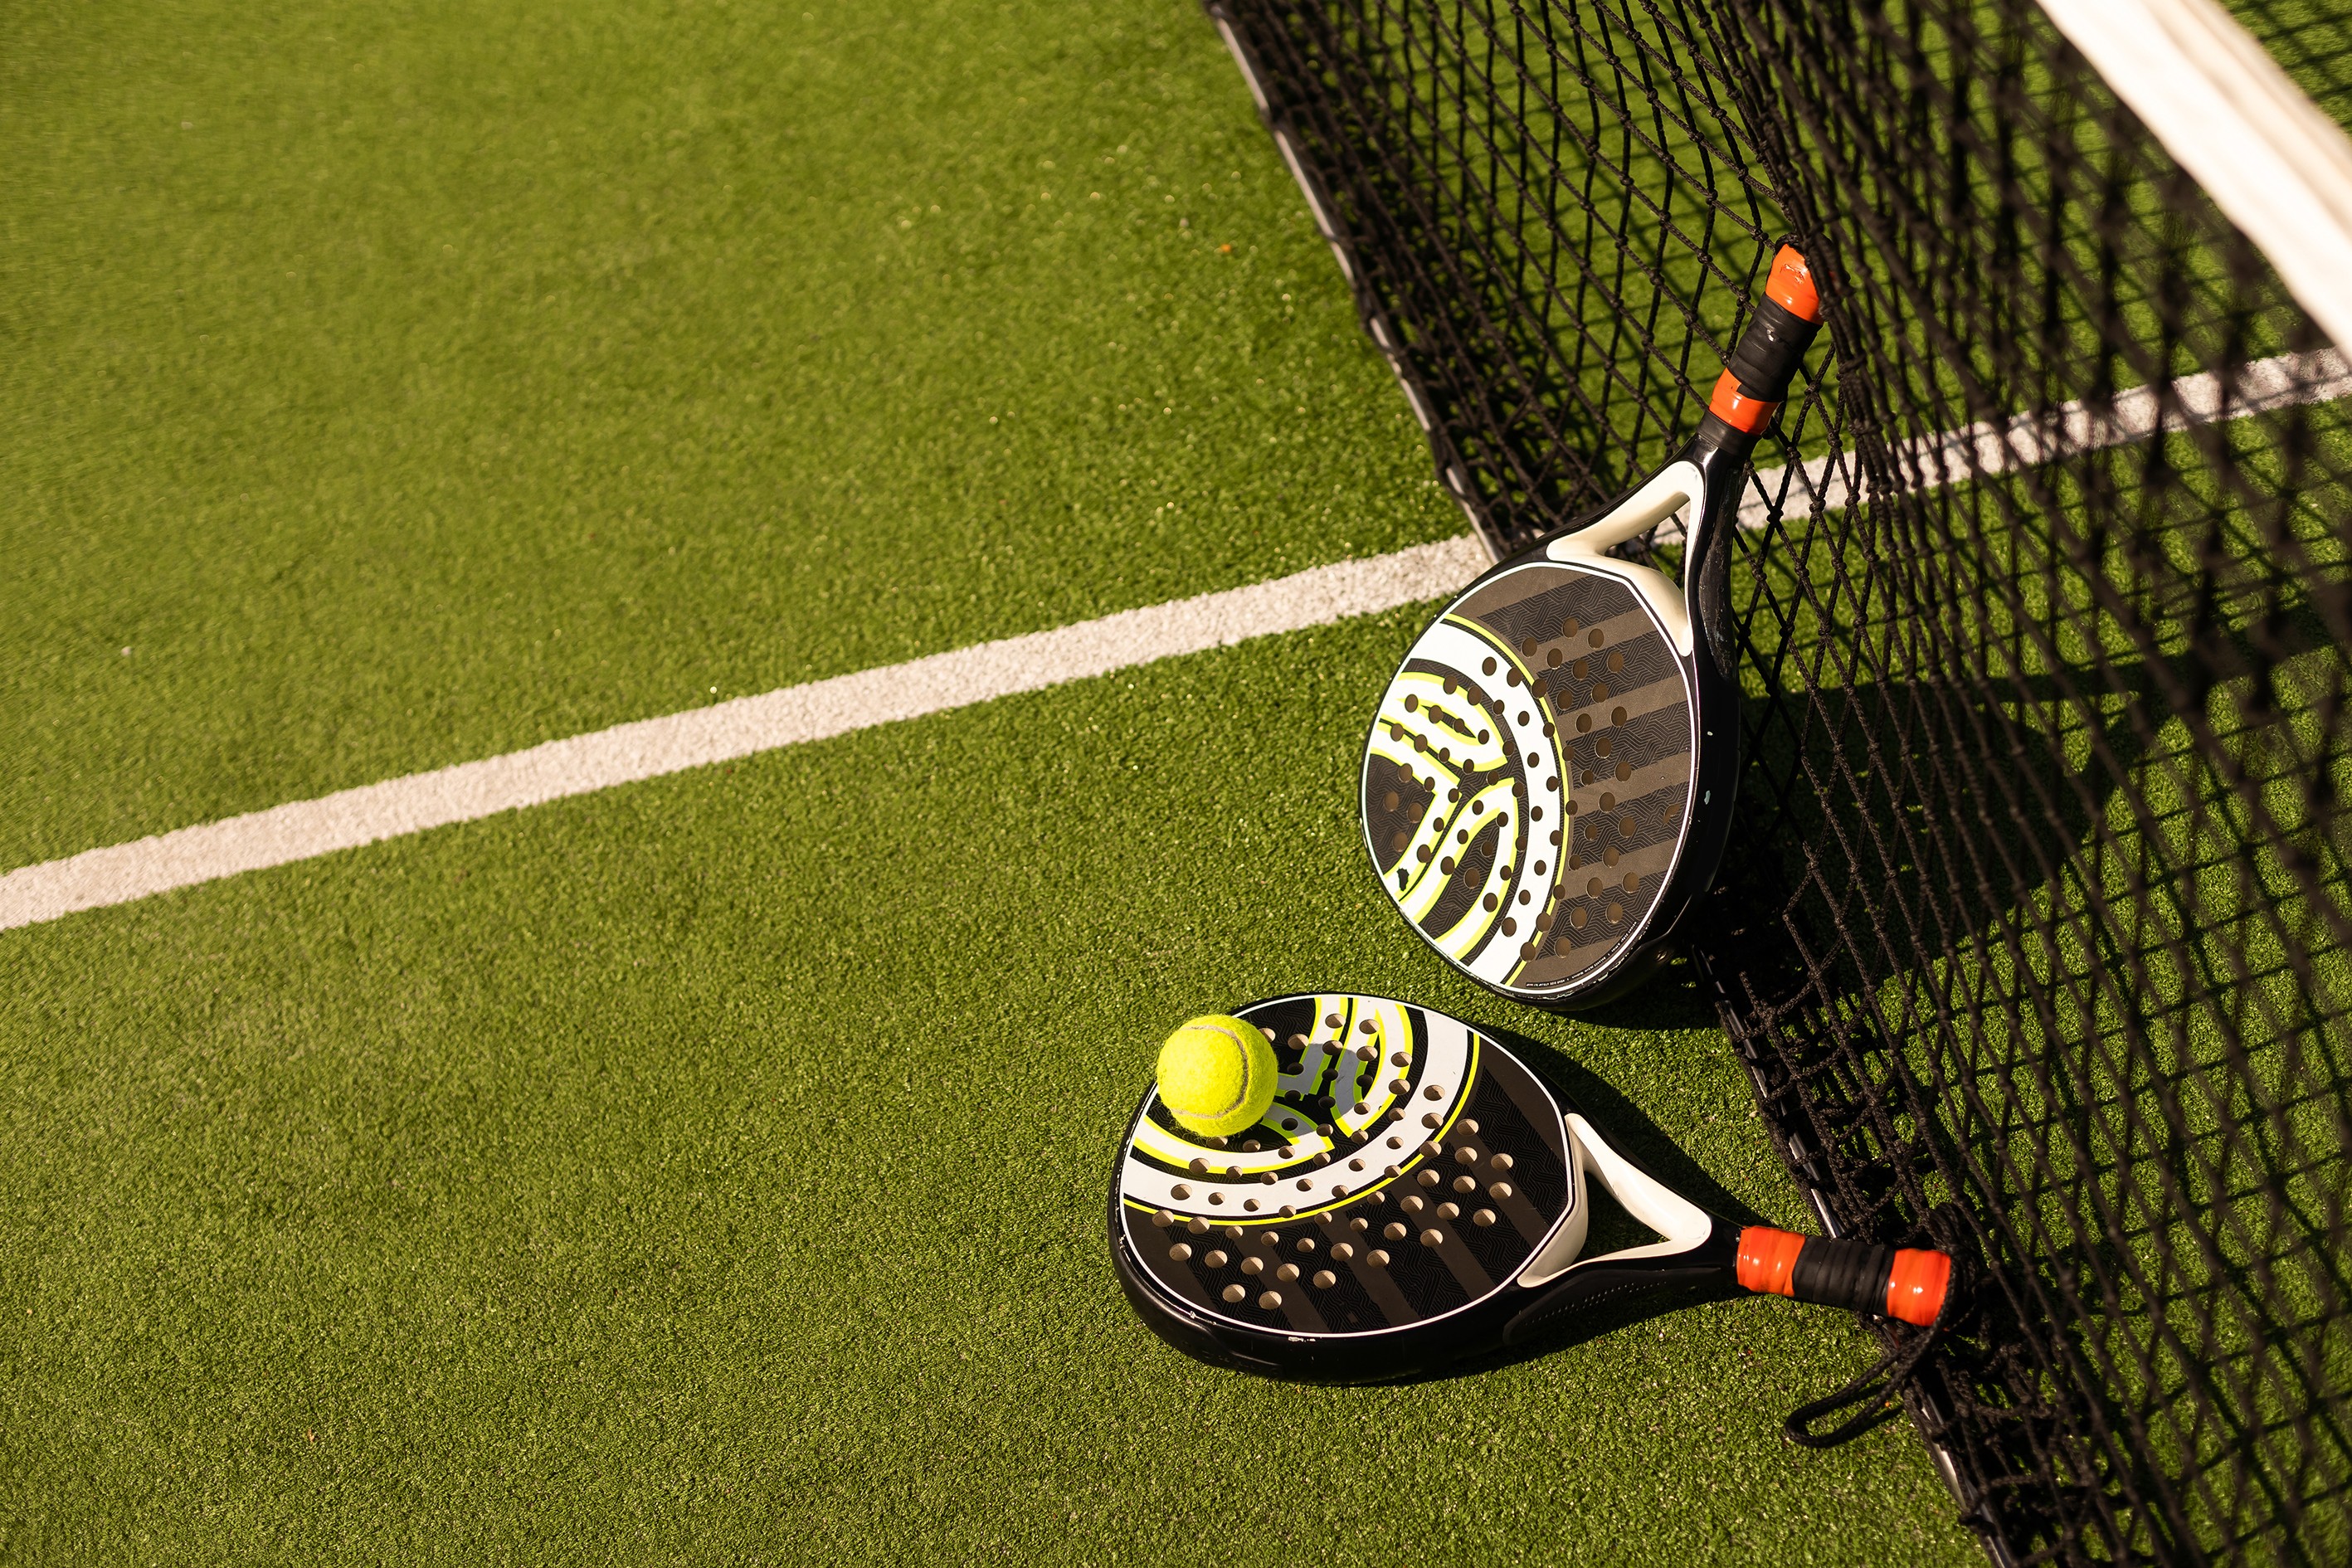 racquets